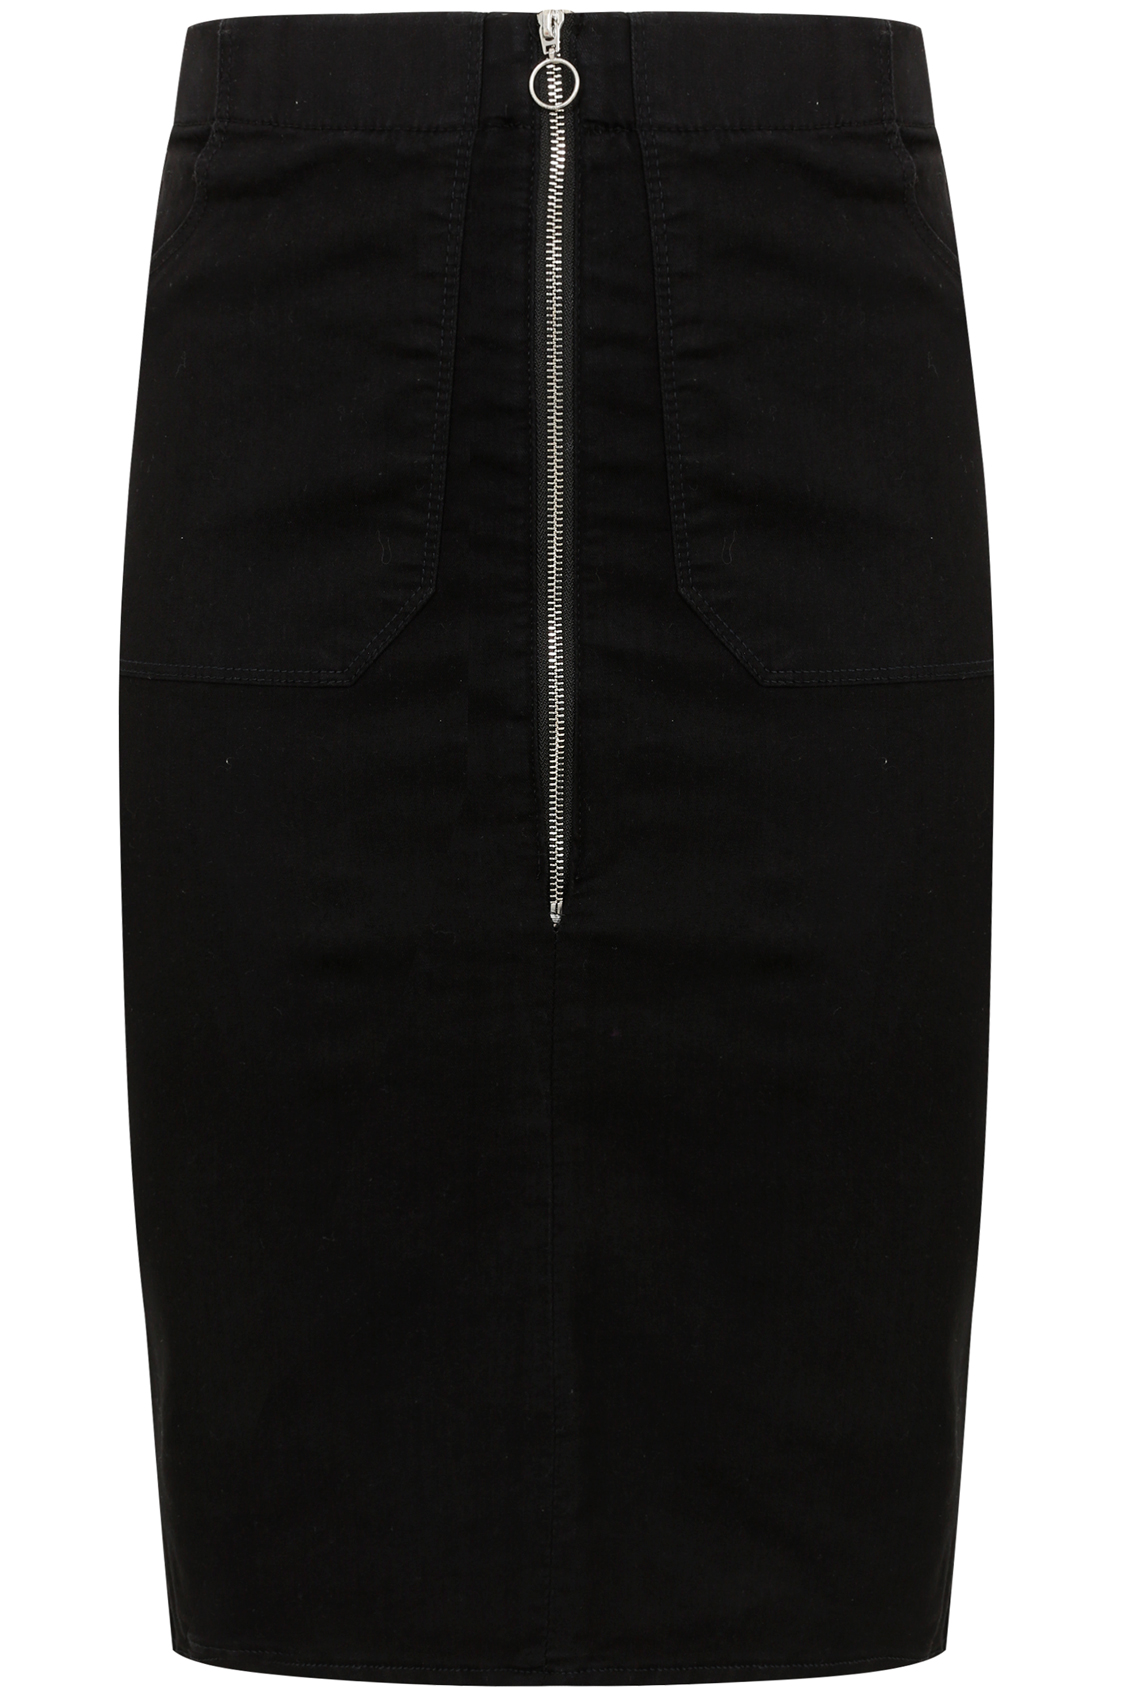 Black Denim Pencil Skirt With Zip Front Detail 16,18,20,22,24,26,28